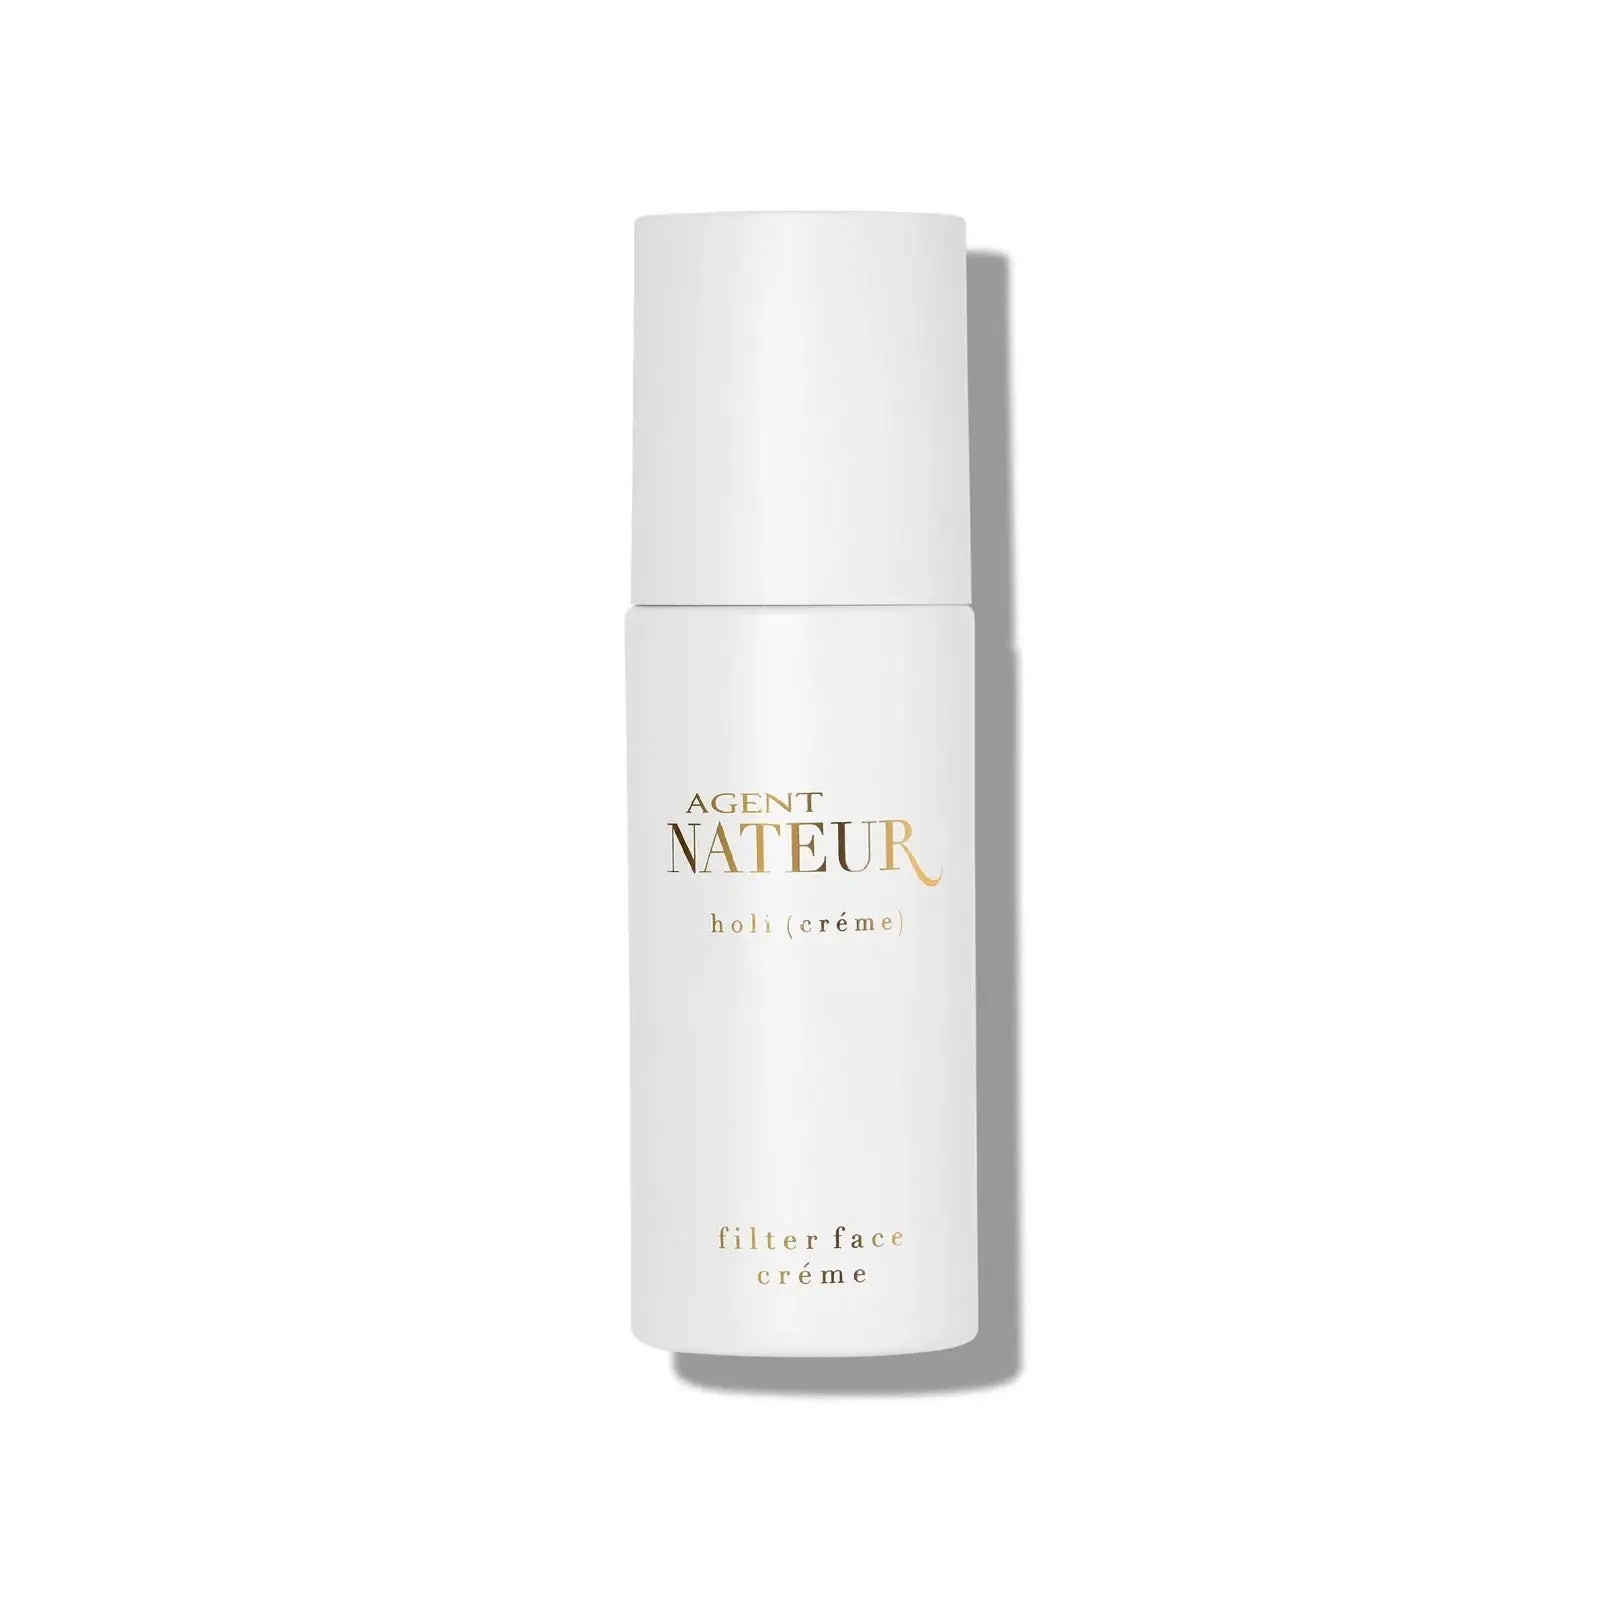 Agent Nateur Holi (Crème) Filter Face Cream 50 ml - Free 